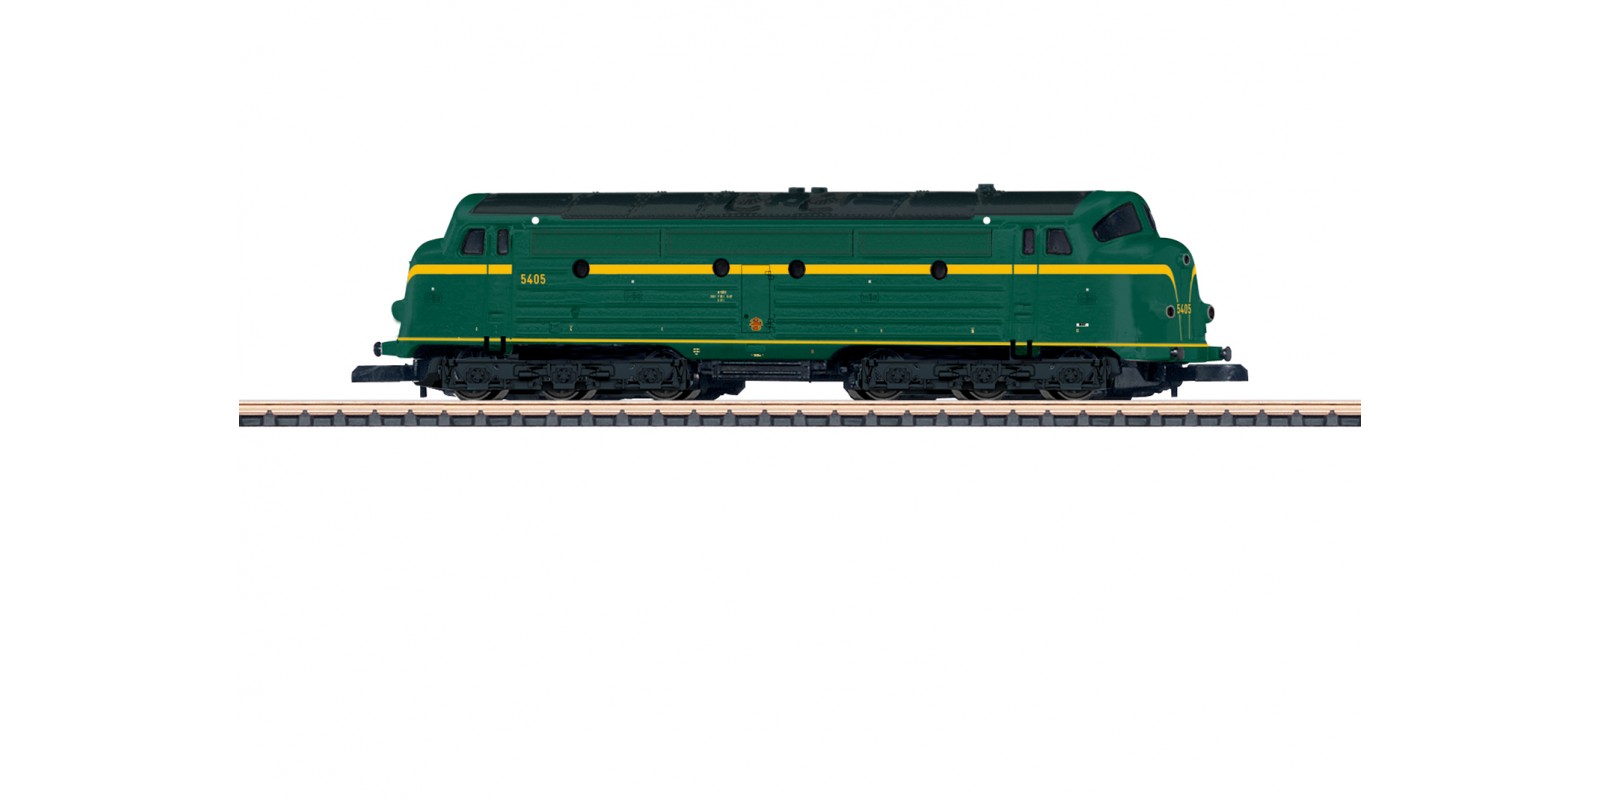 88634 Class 54 Diesel Locomotive